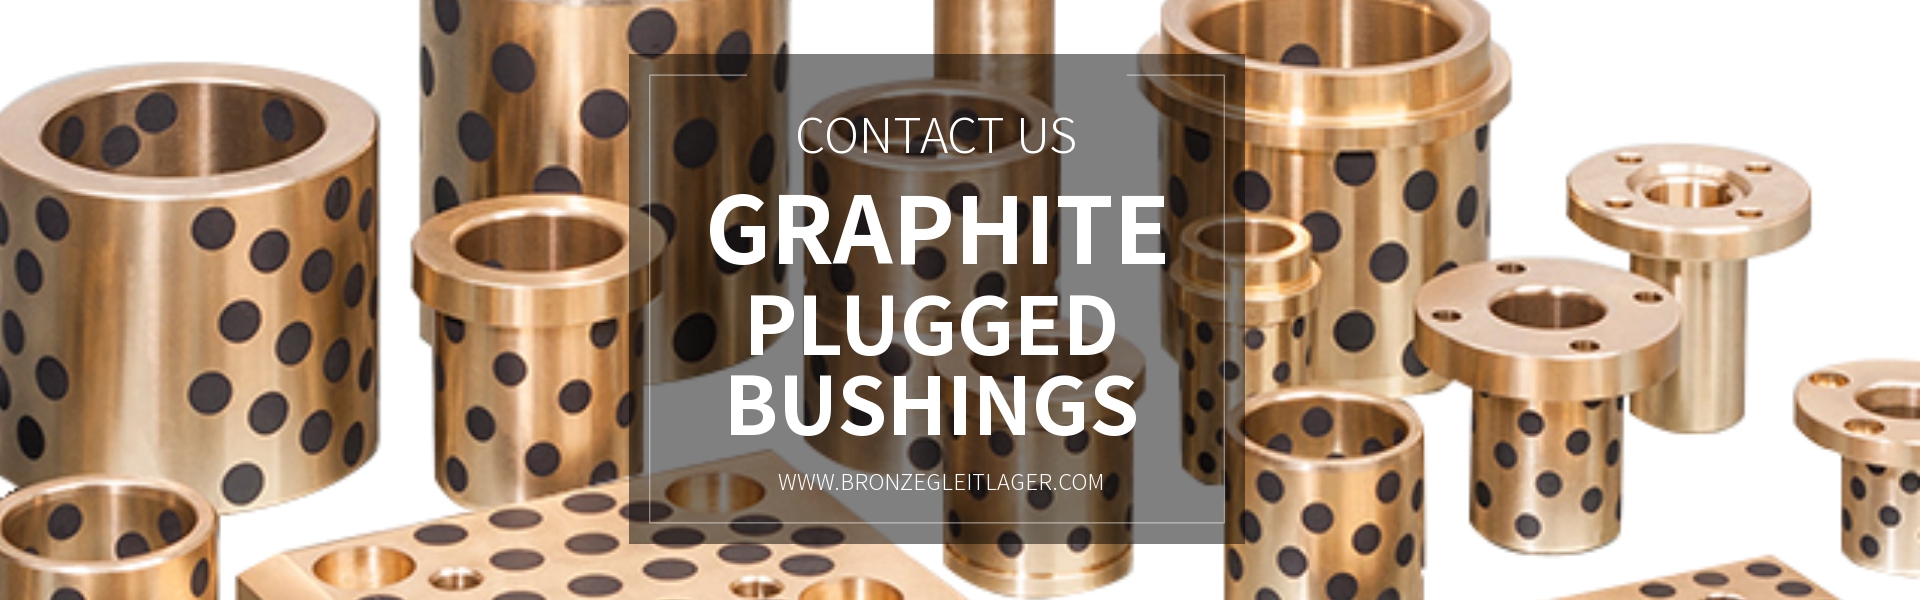 graphite plugged bushings